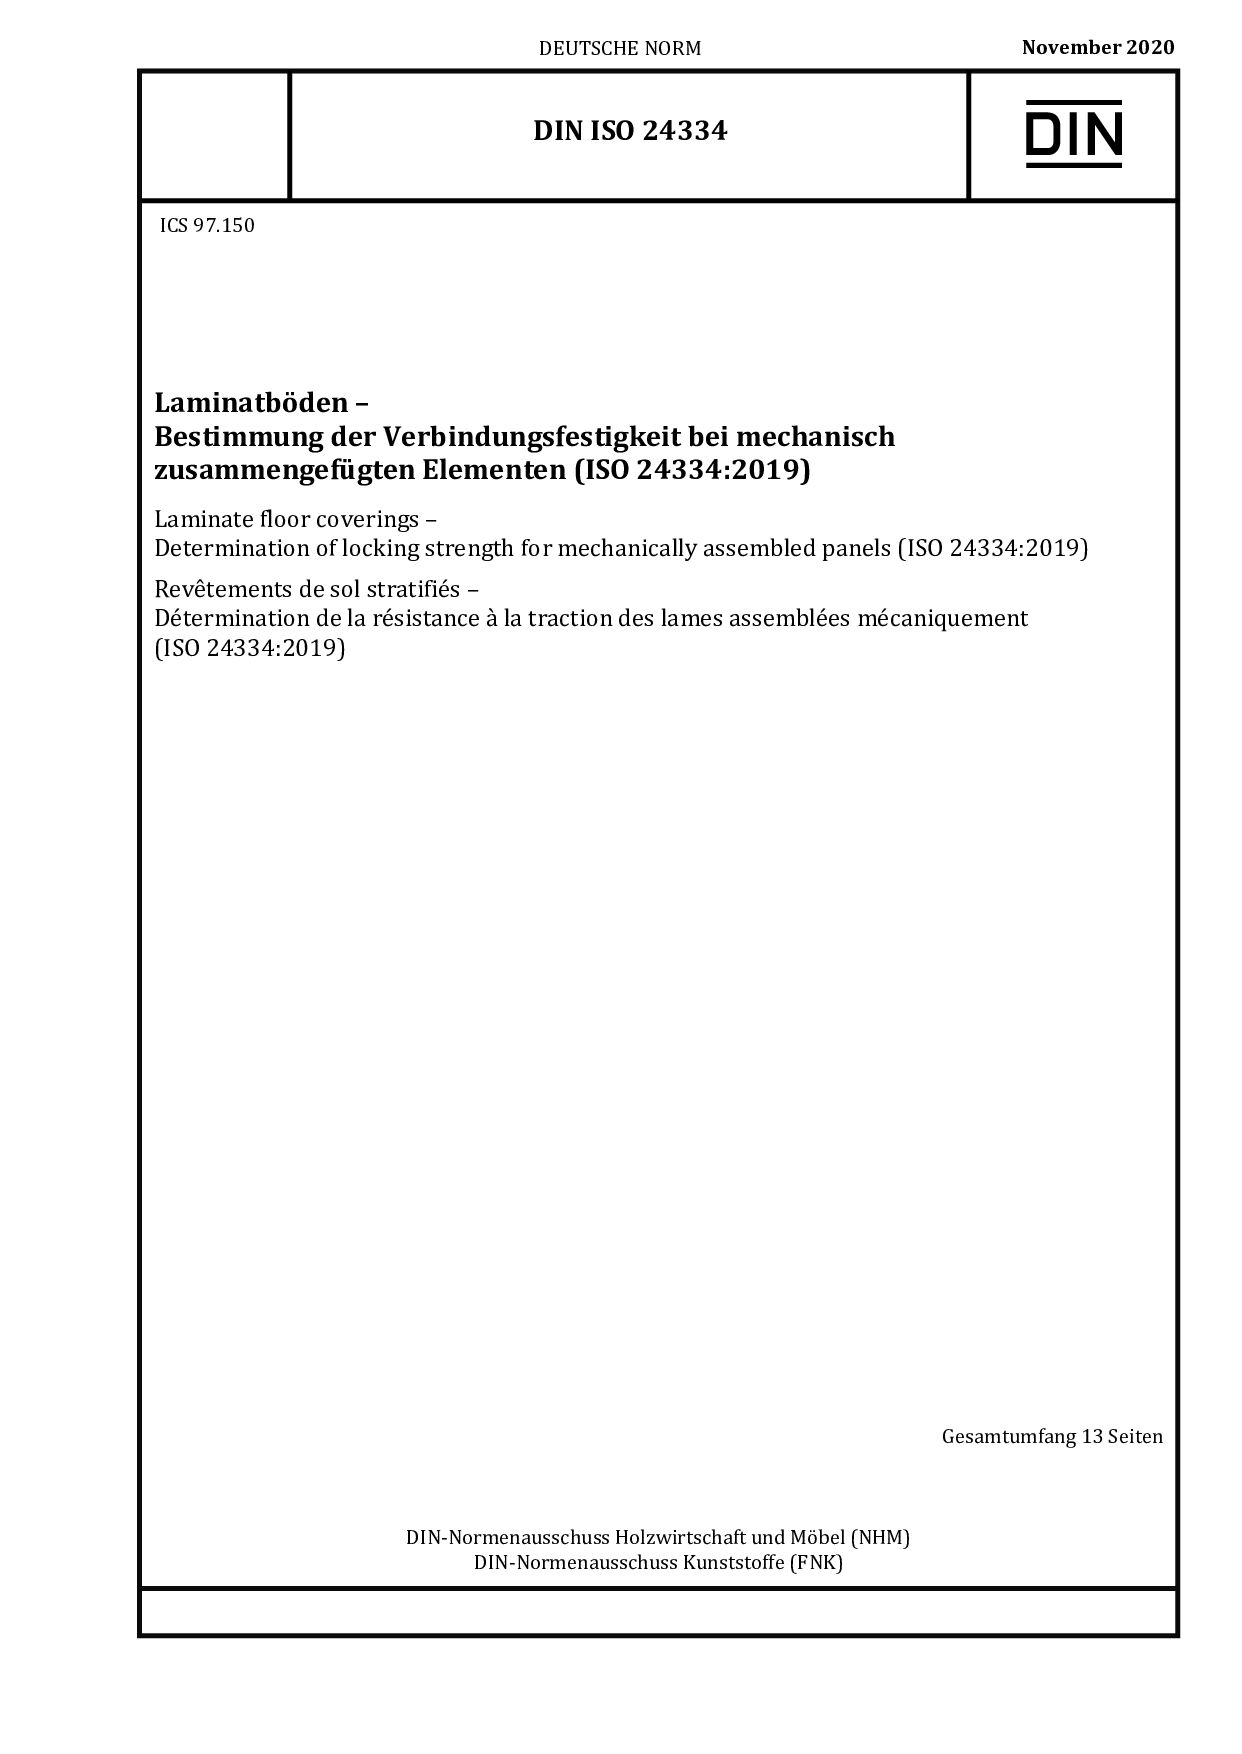 DIN ISO 24334:2020-11